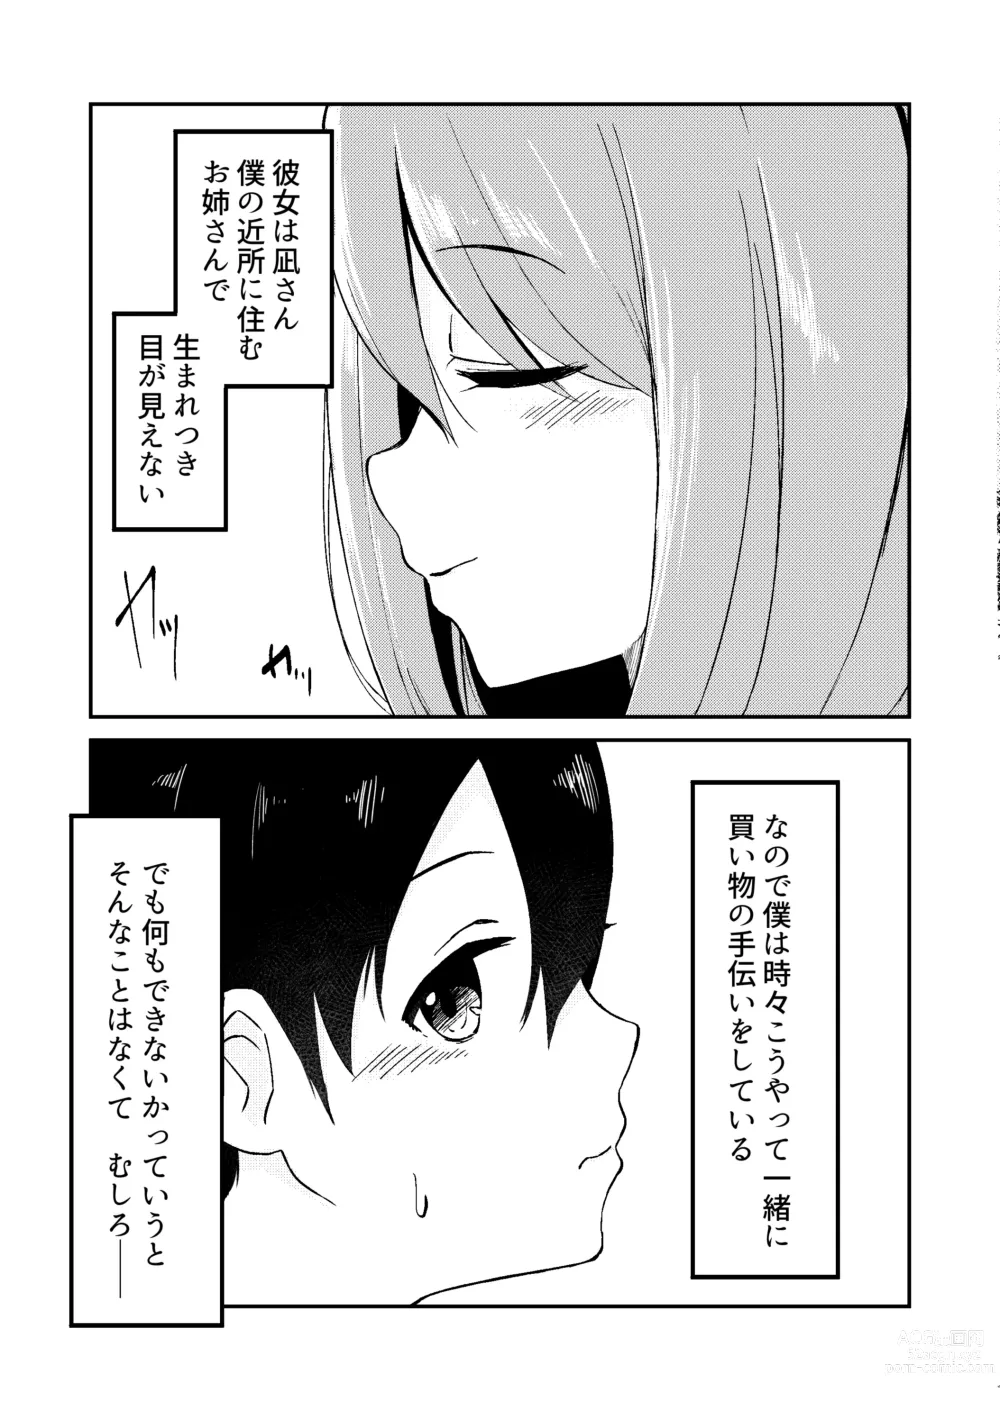 Page 3 of doujinshi Kimi ga Mienakutatte